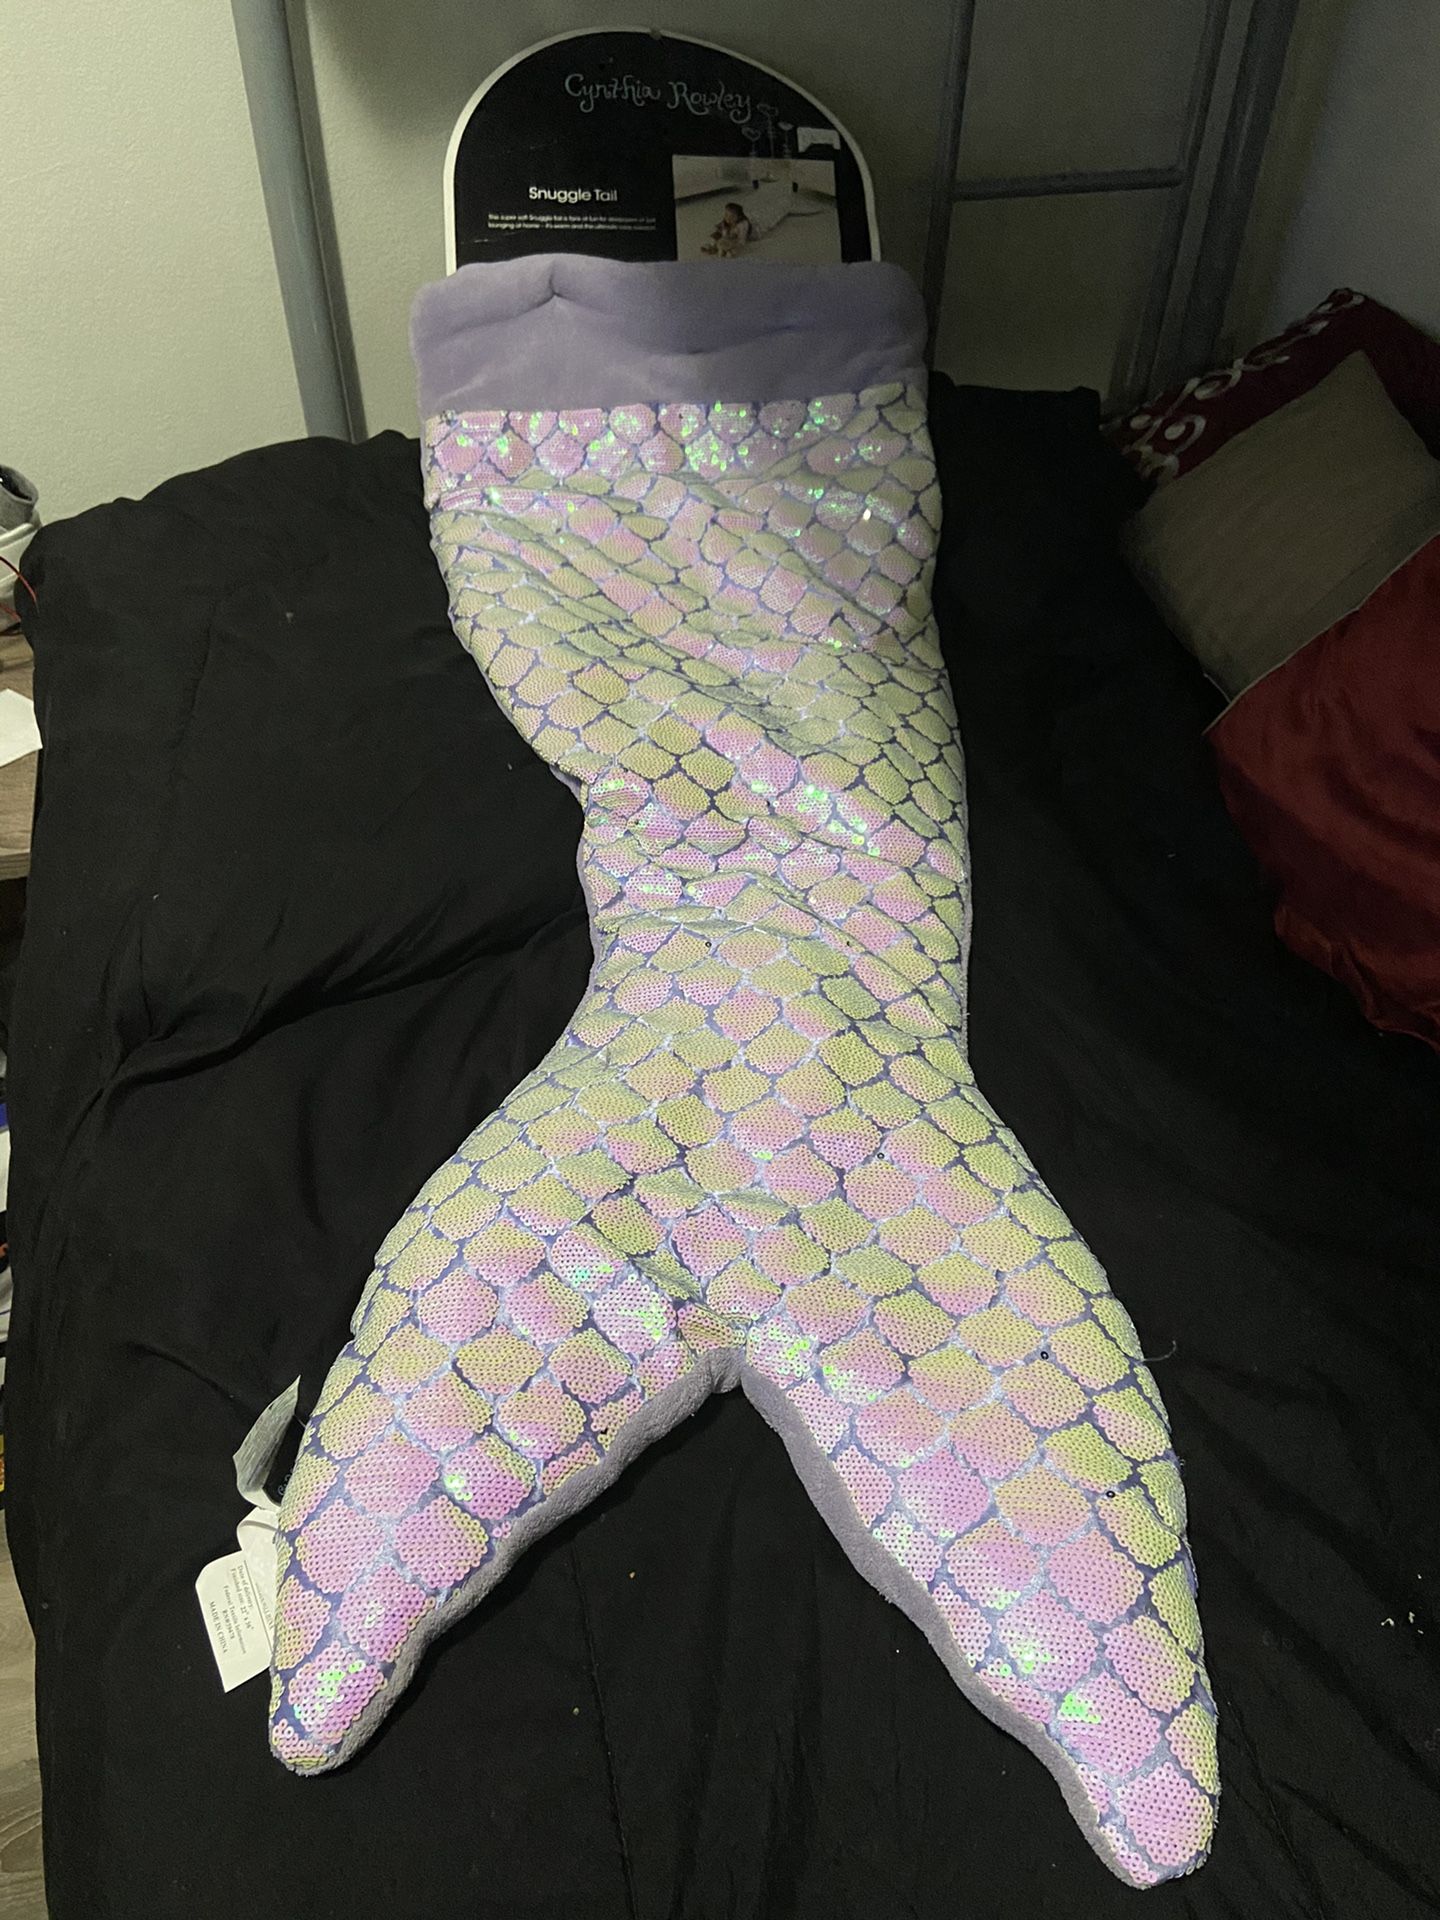 Cynthia Rowley Mermaid Snuggle Tail Blanket